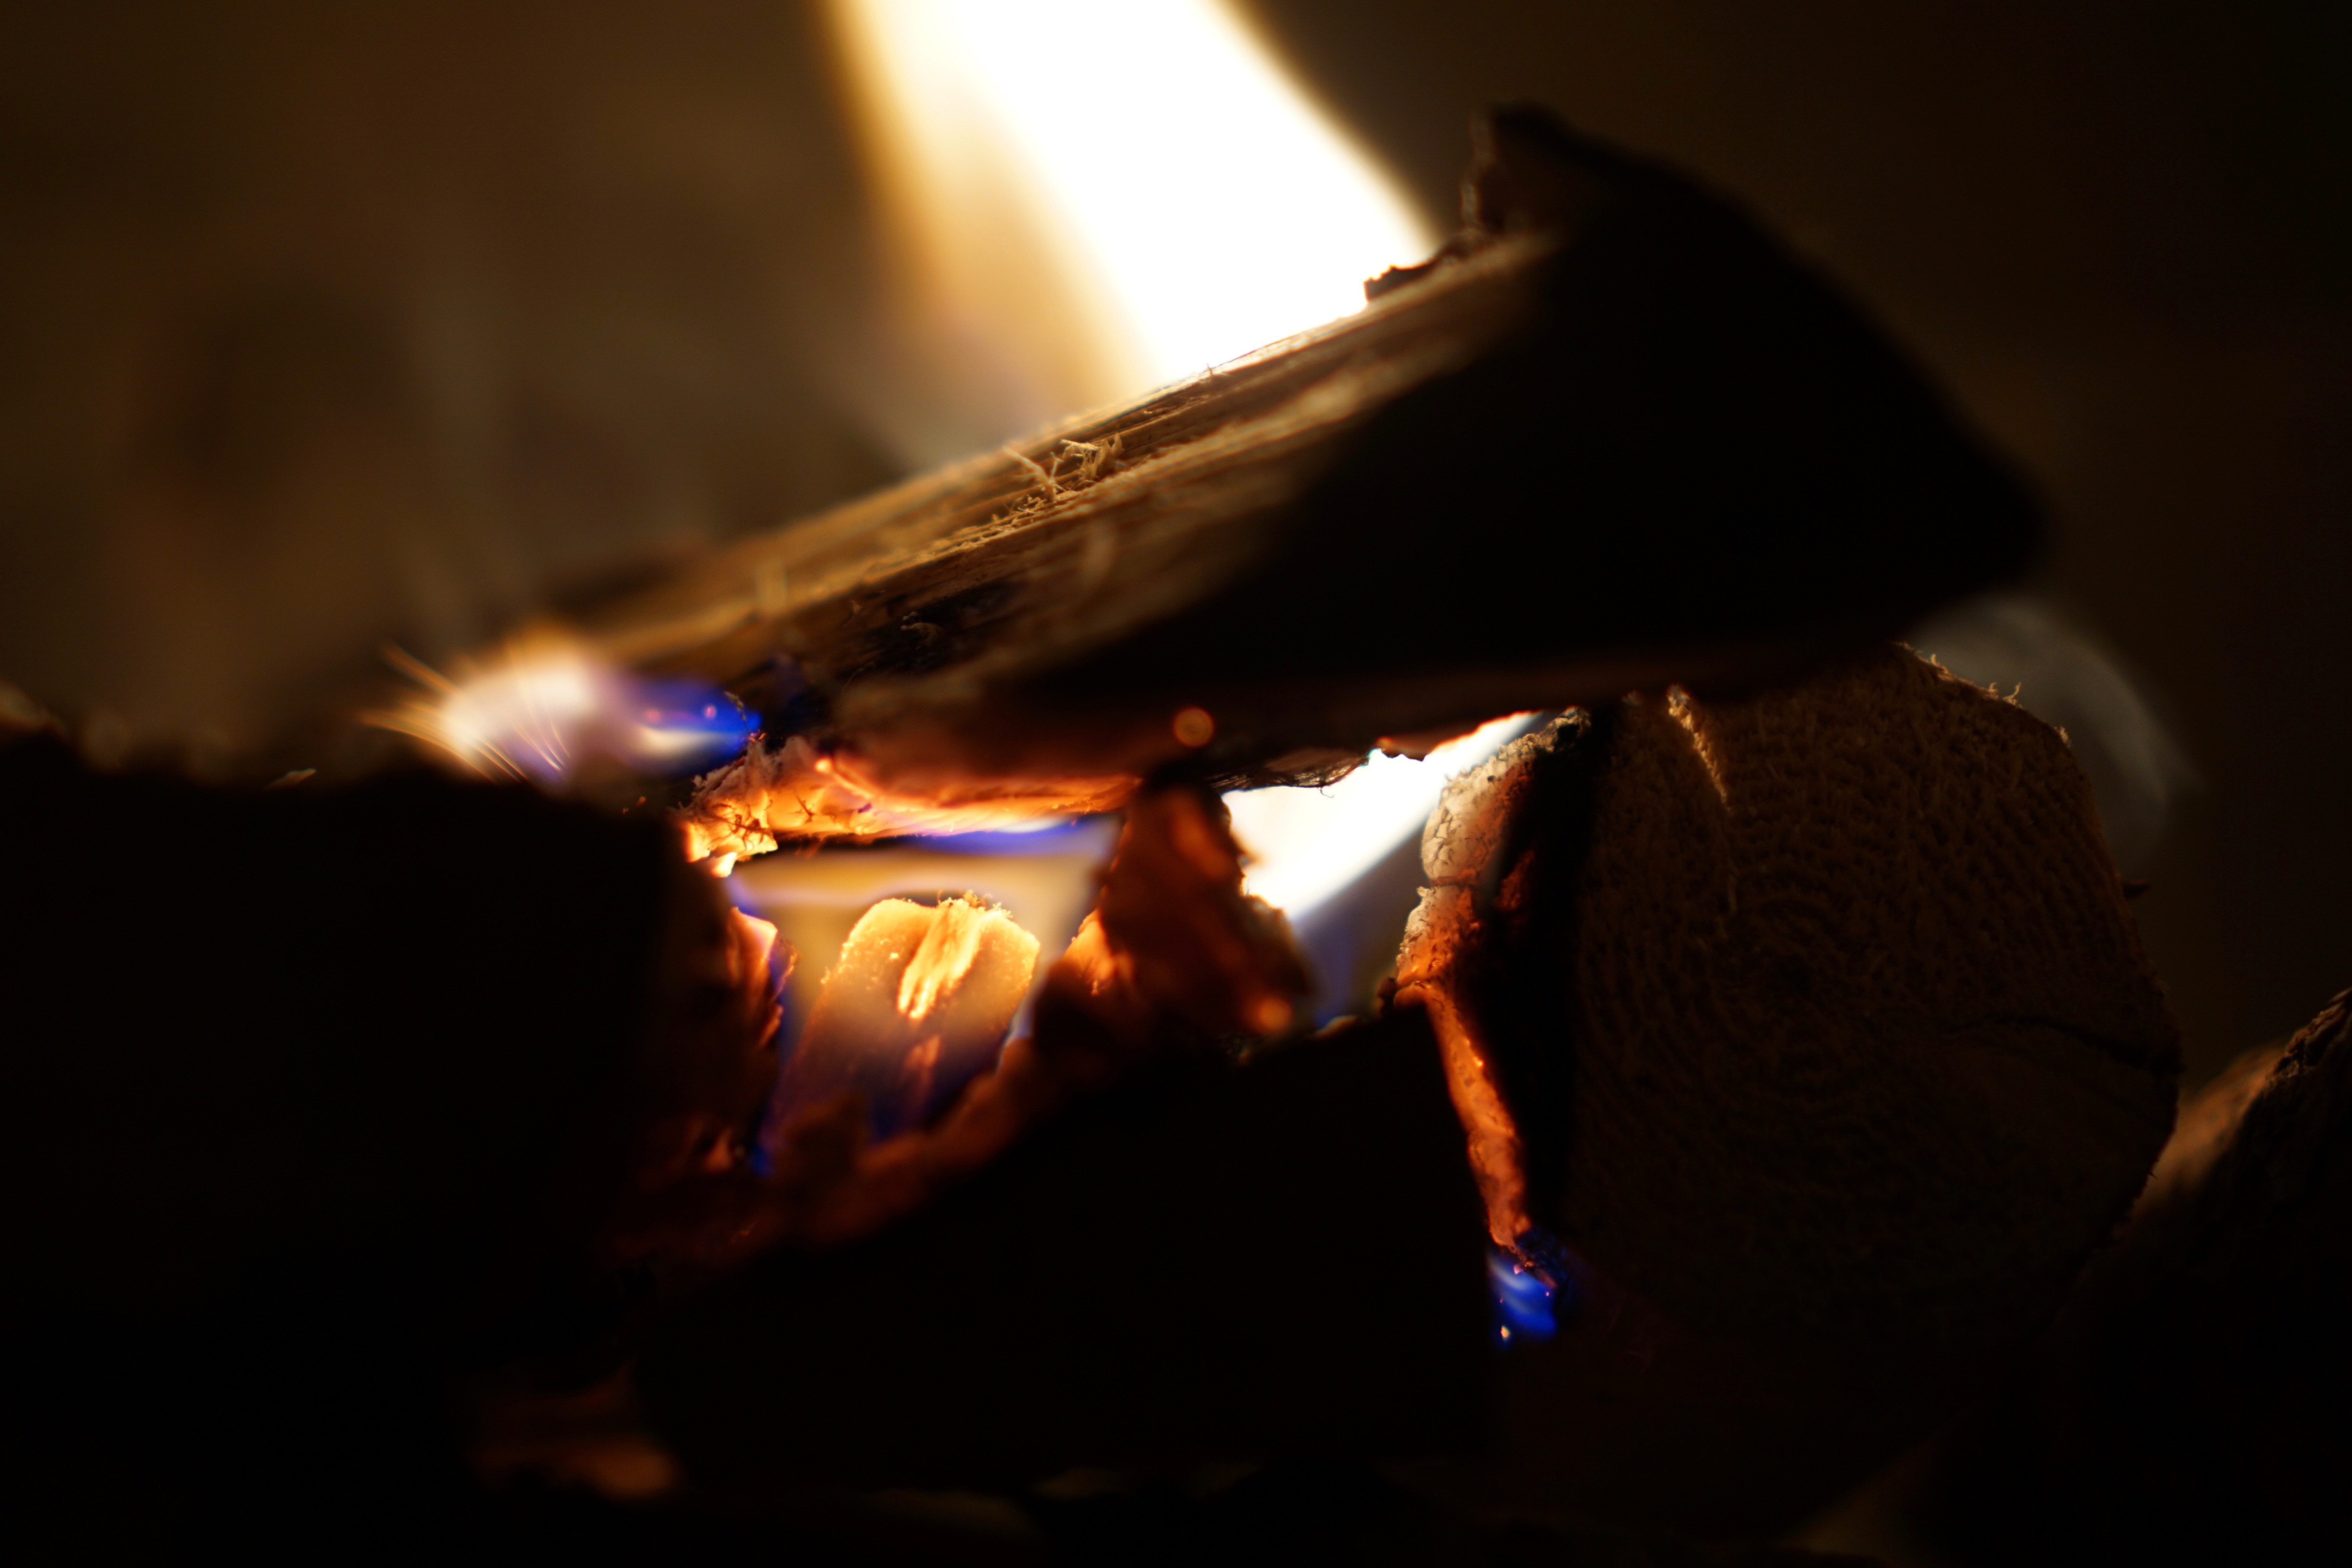 Fireplace, Flame, Fire, Log, Wood, Burn, illuminated, night